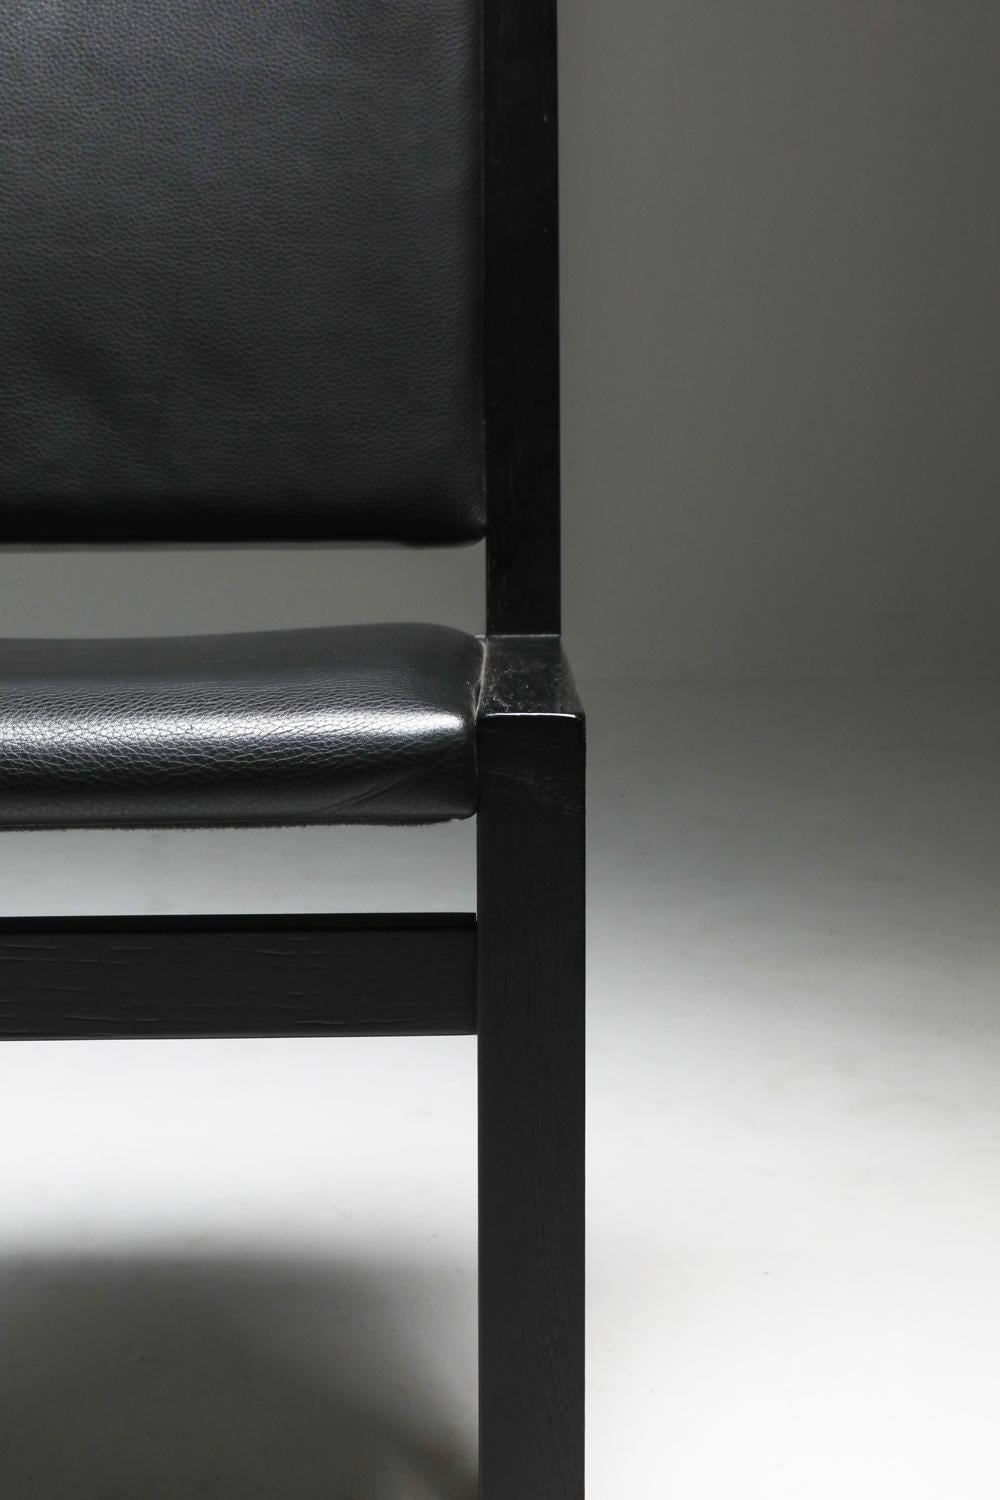 Contemporary Ebonized Oak Dining Chairs by Antonio Citterio for Maxalto, 2000s For Sale